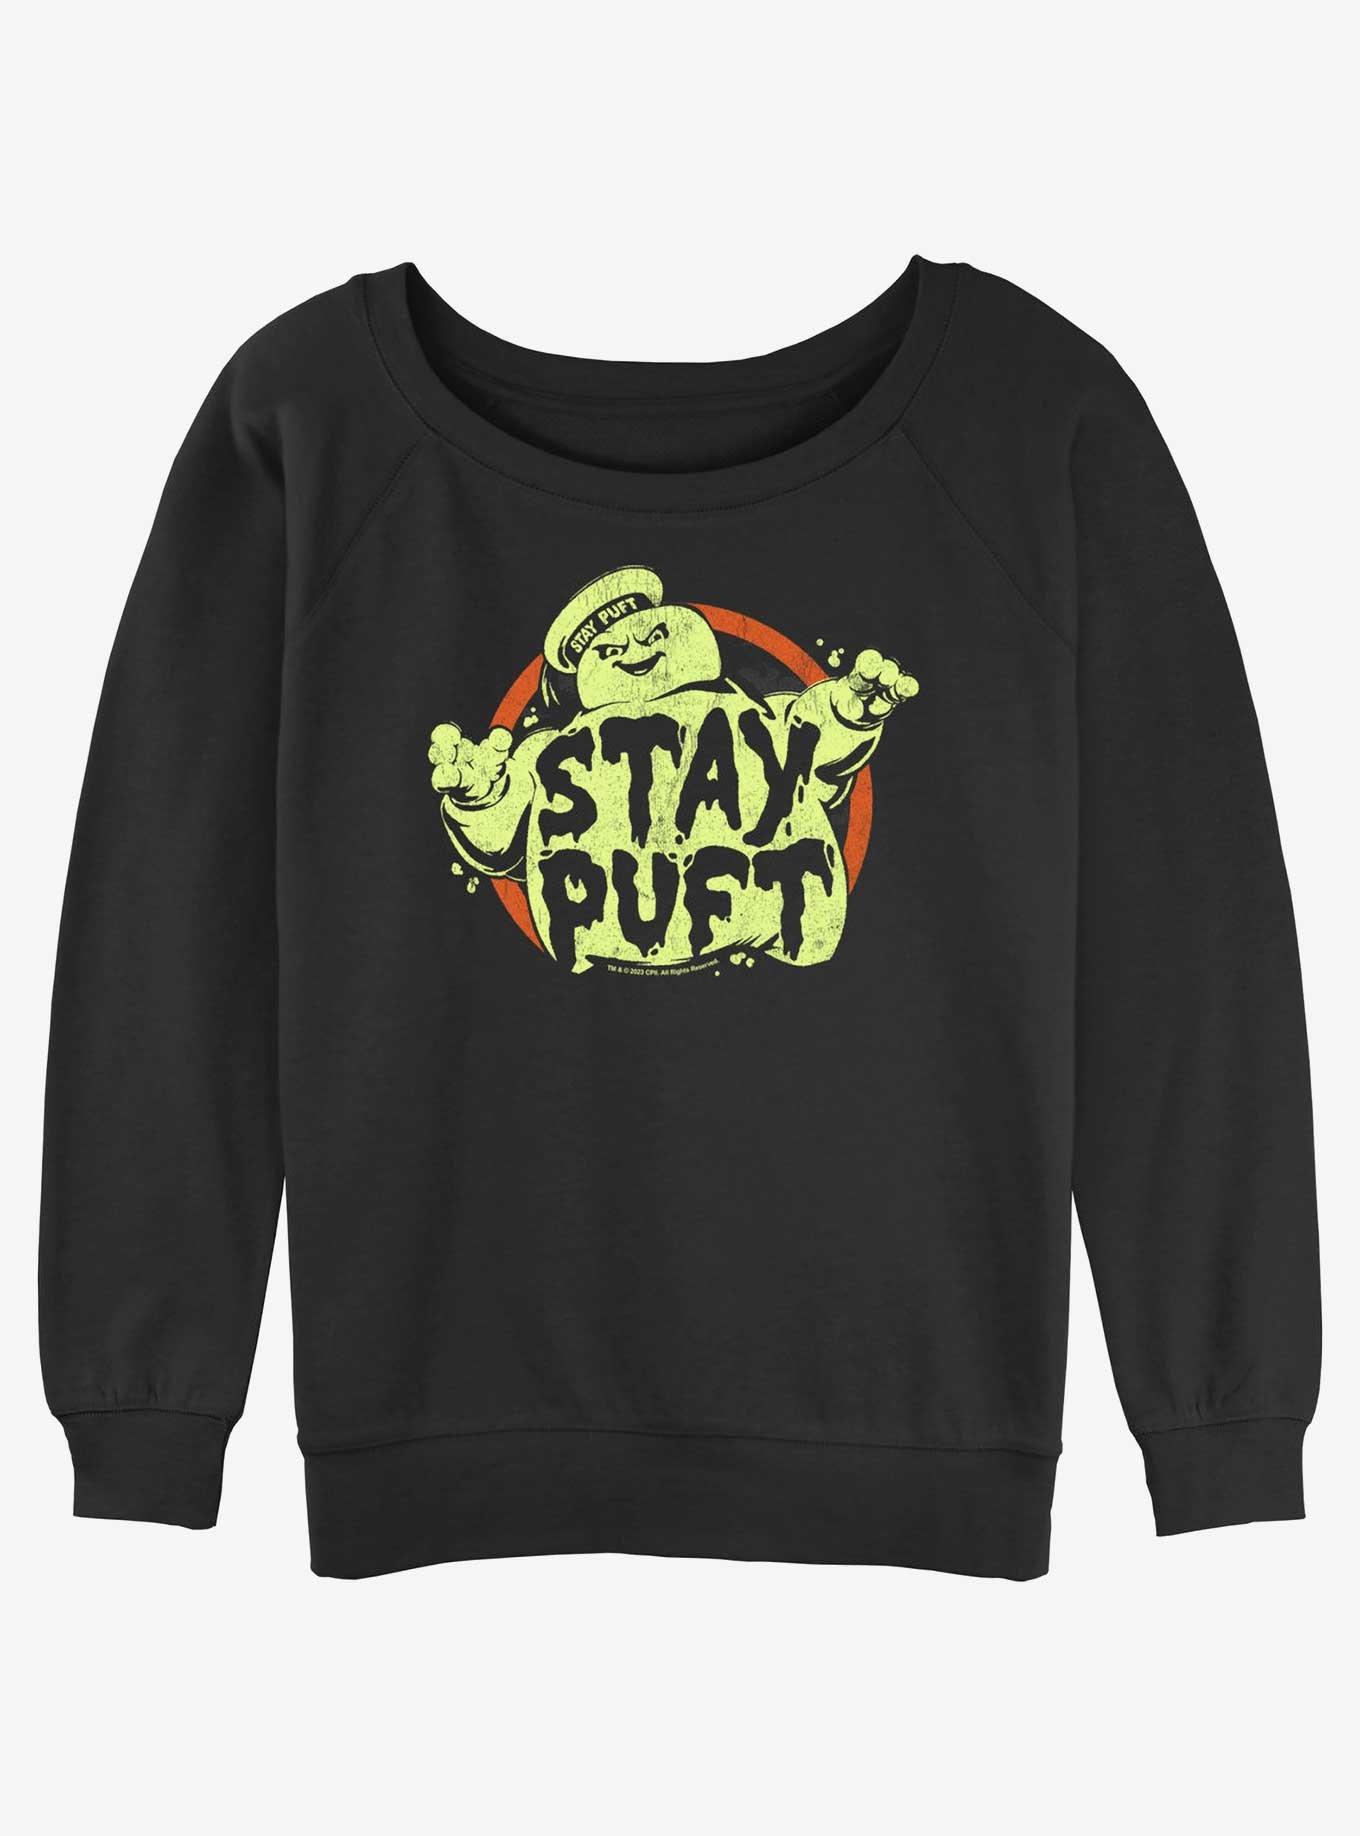 Ghostbusters Staying Puft Girls Slouchy Sweatshirt, BLACK, hi-res